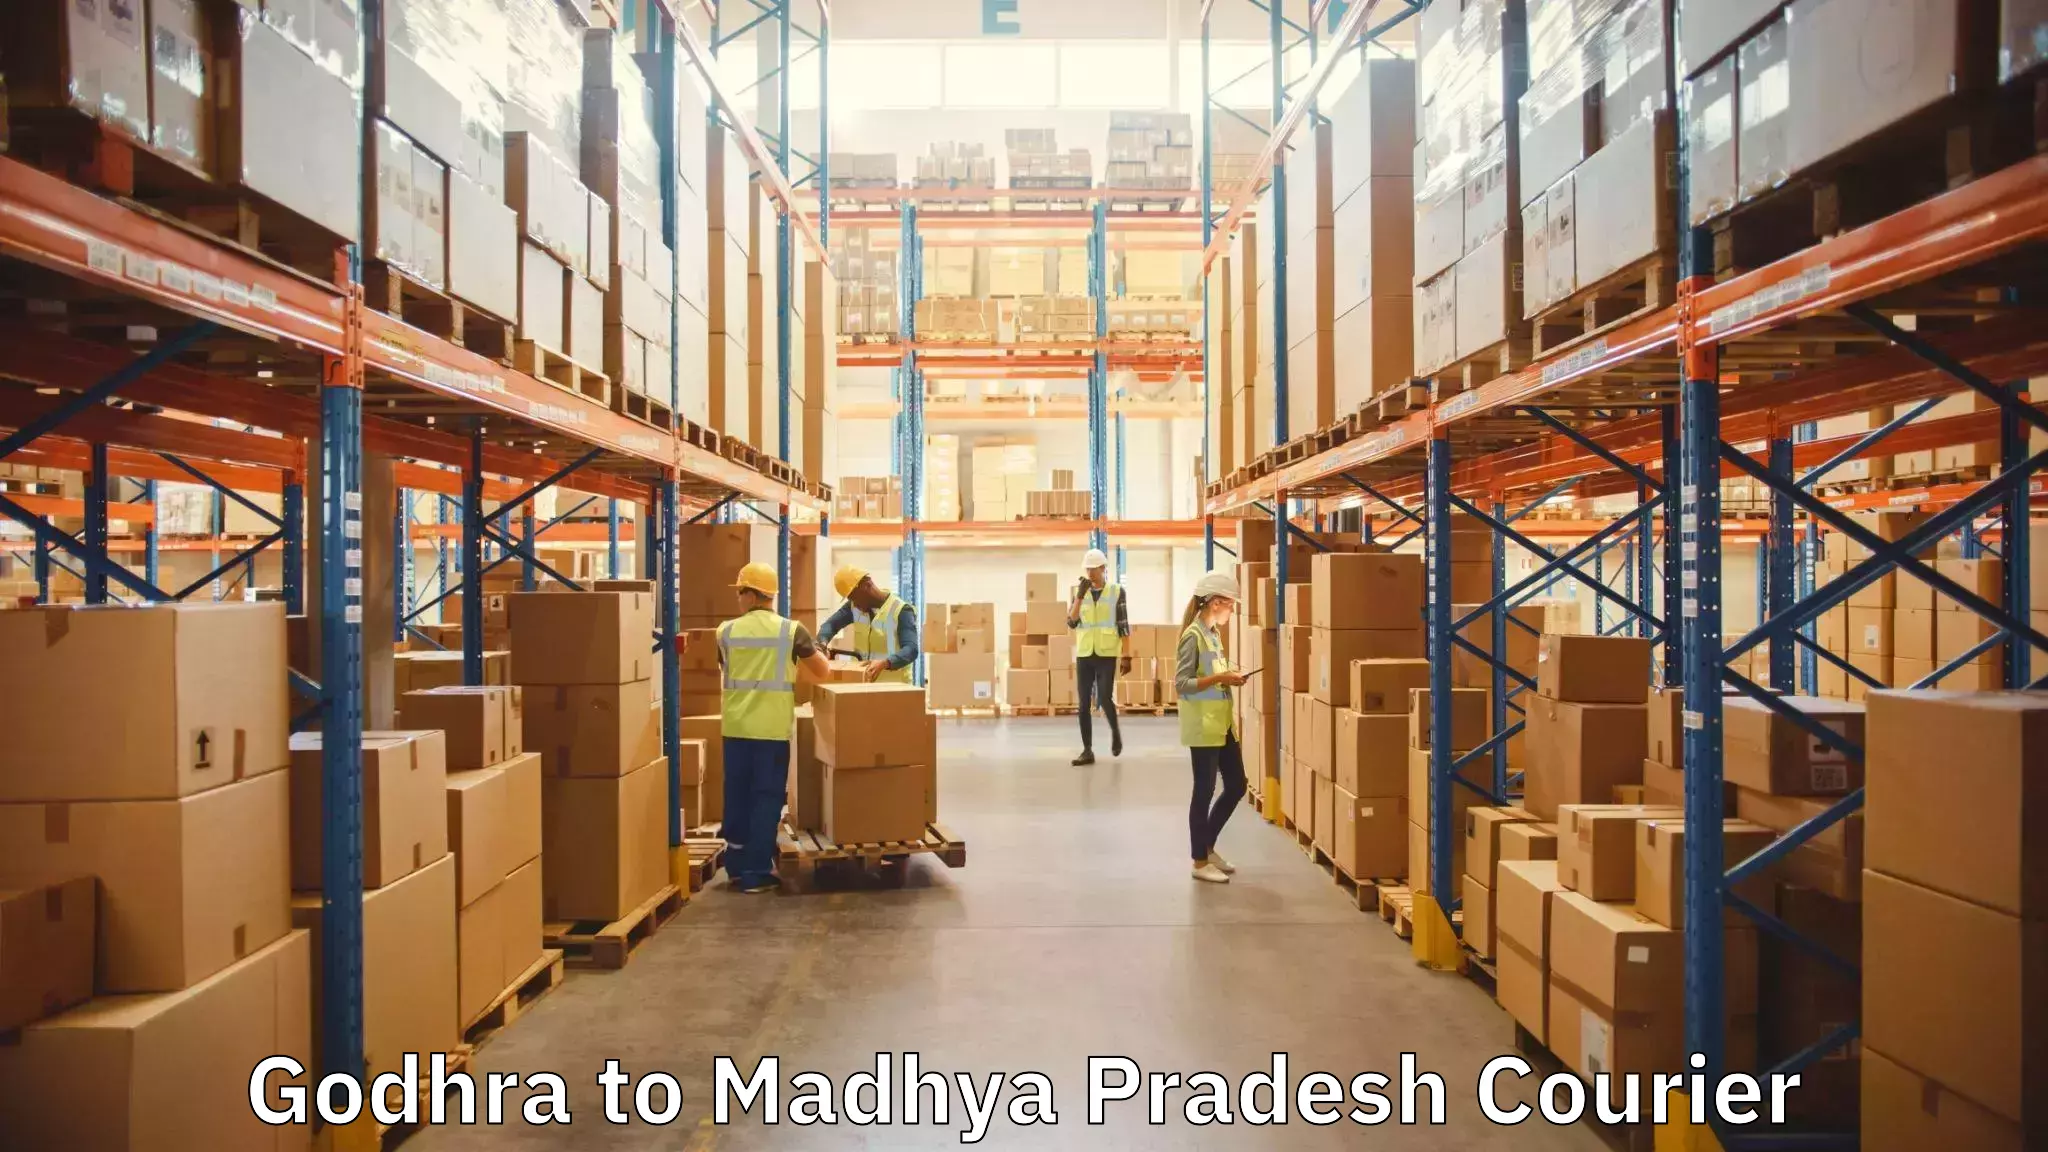 Moving and packing experts Godhra to Madhya Pradesh